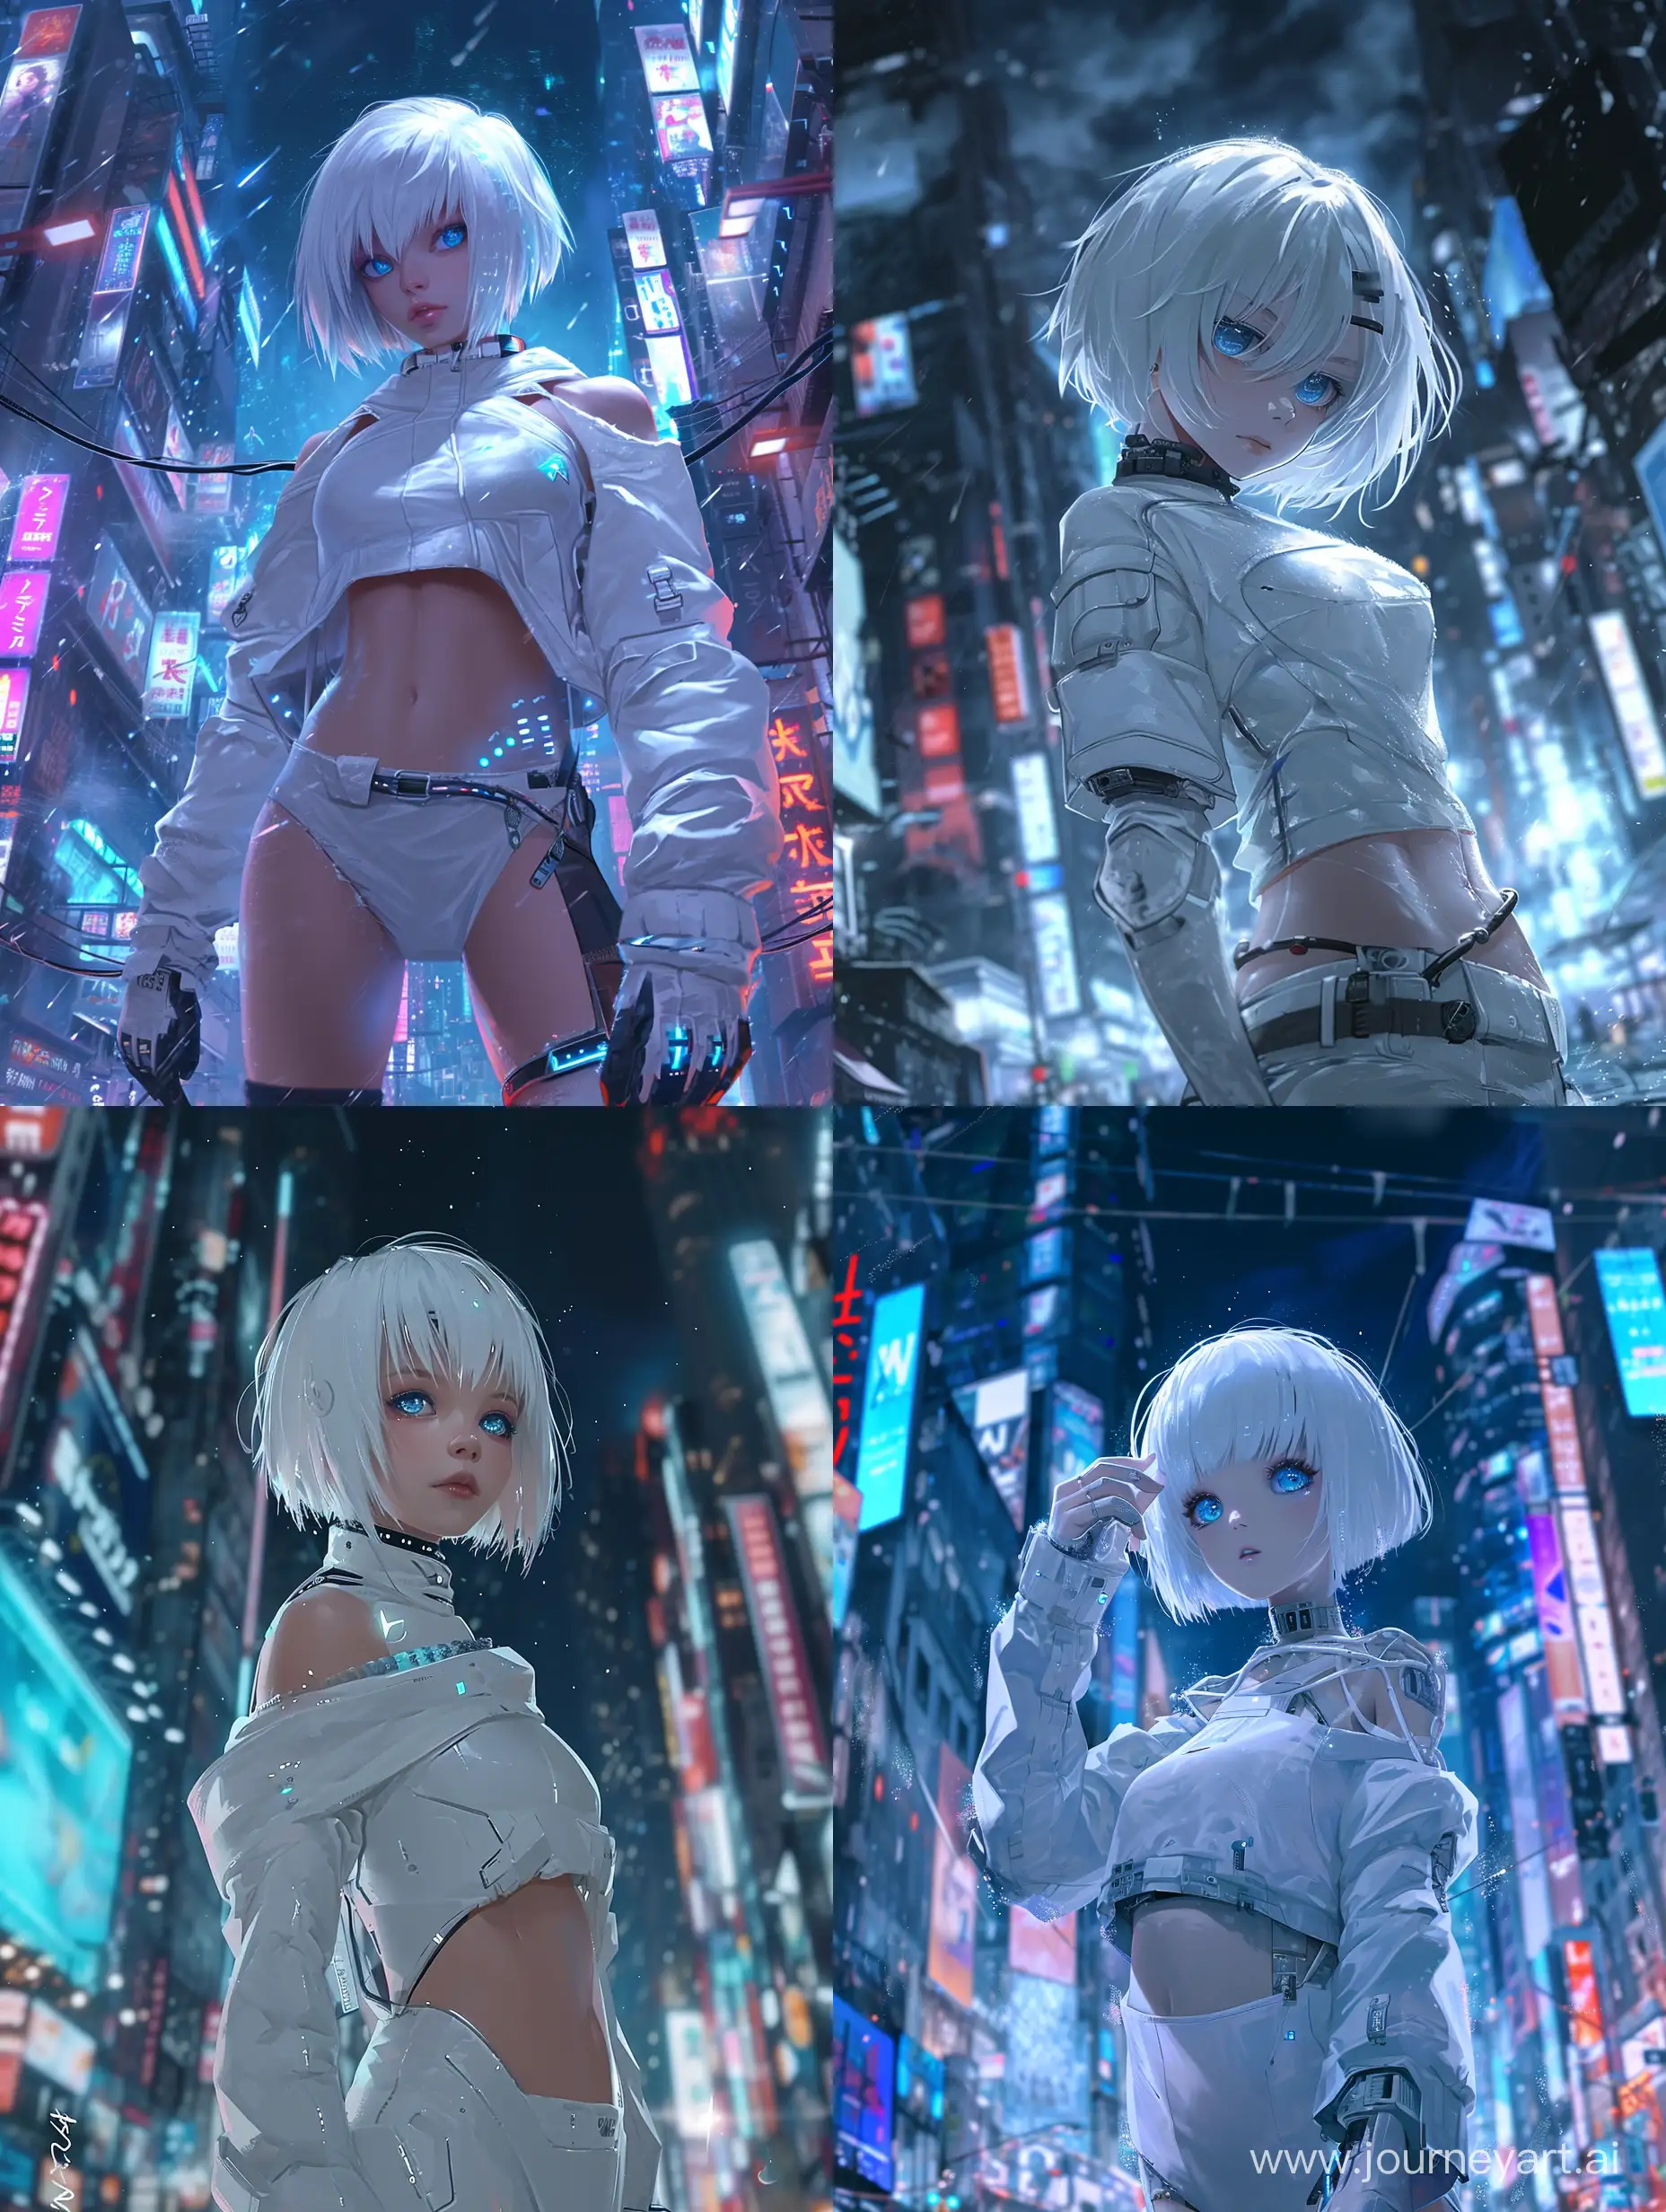 Serious-Cyberpunk-Girl-in-Futuristic-City-at-Night